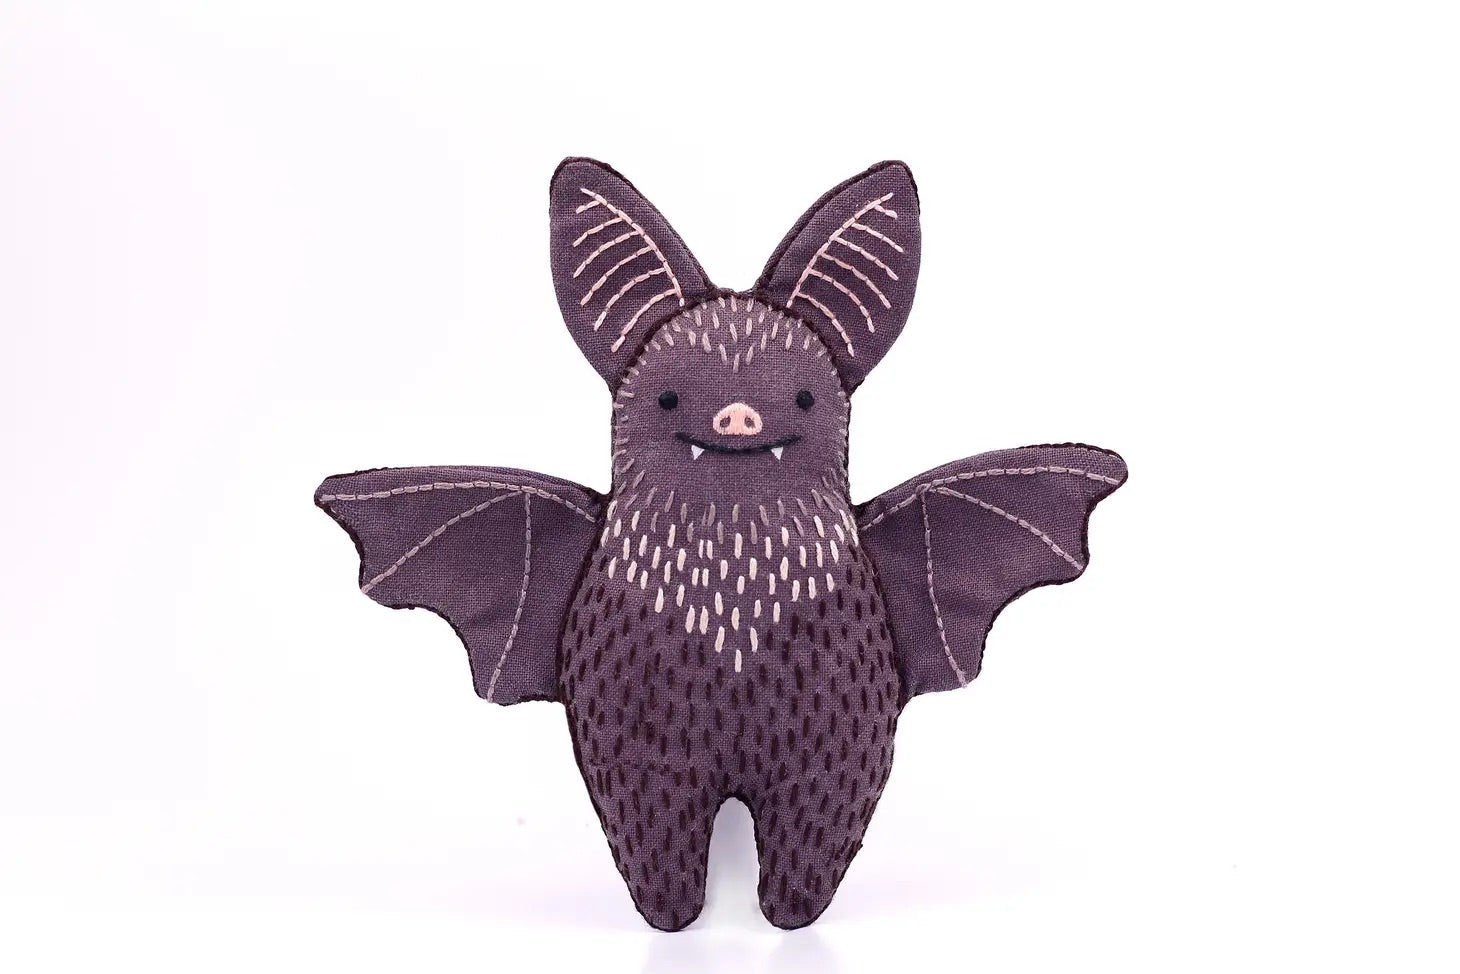 Bat Embroidered Doll Kit